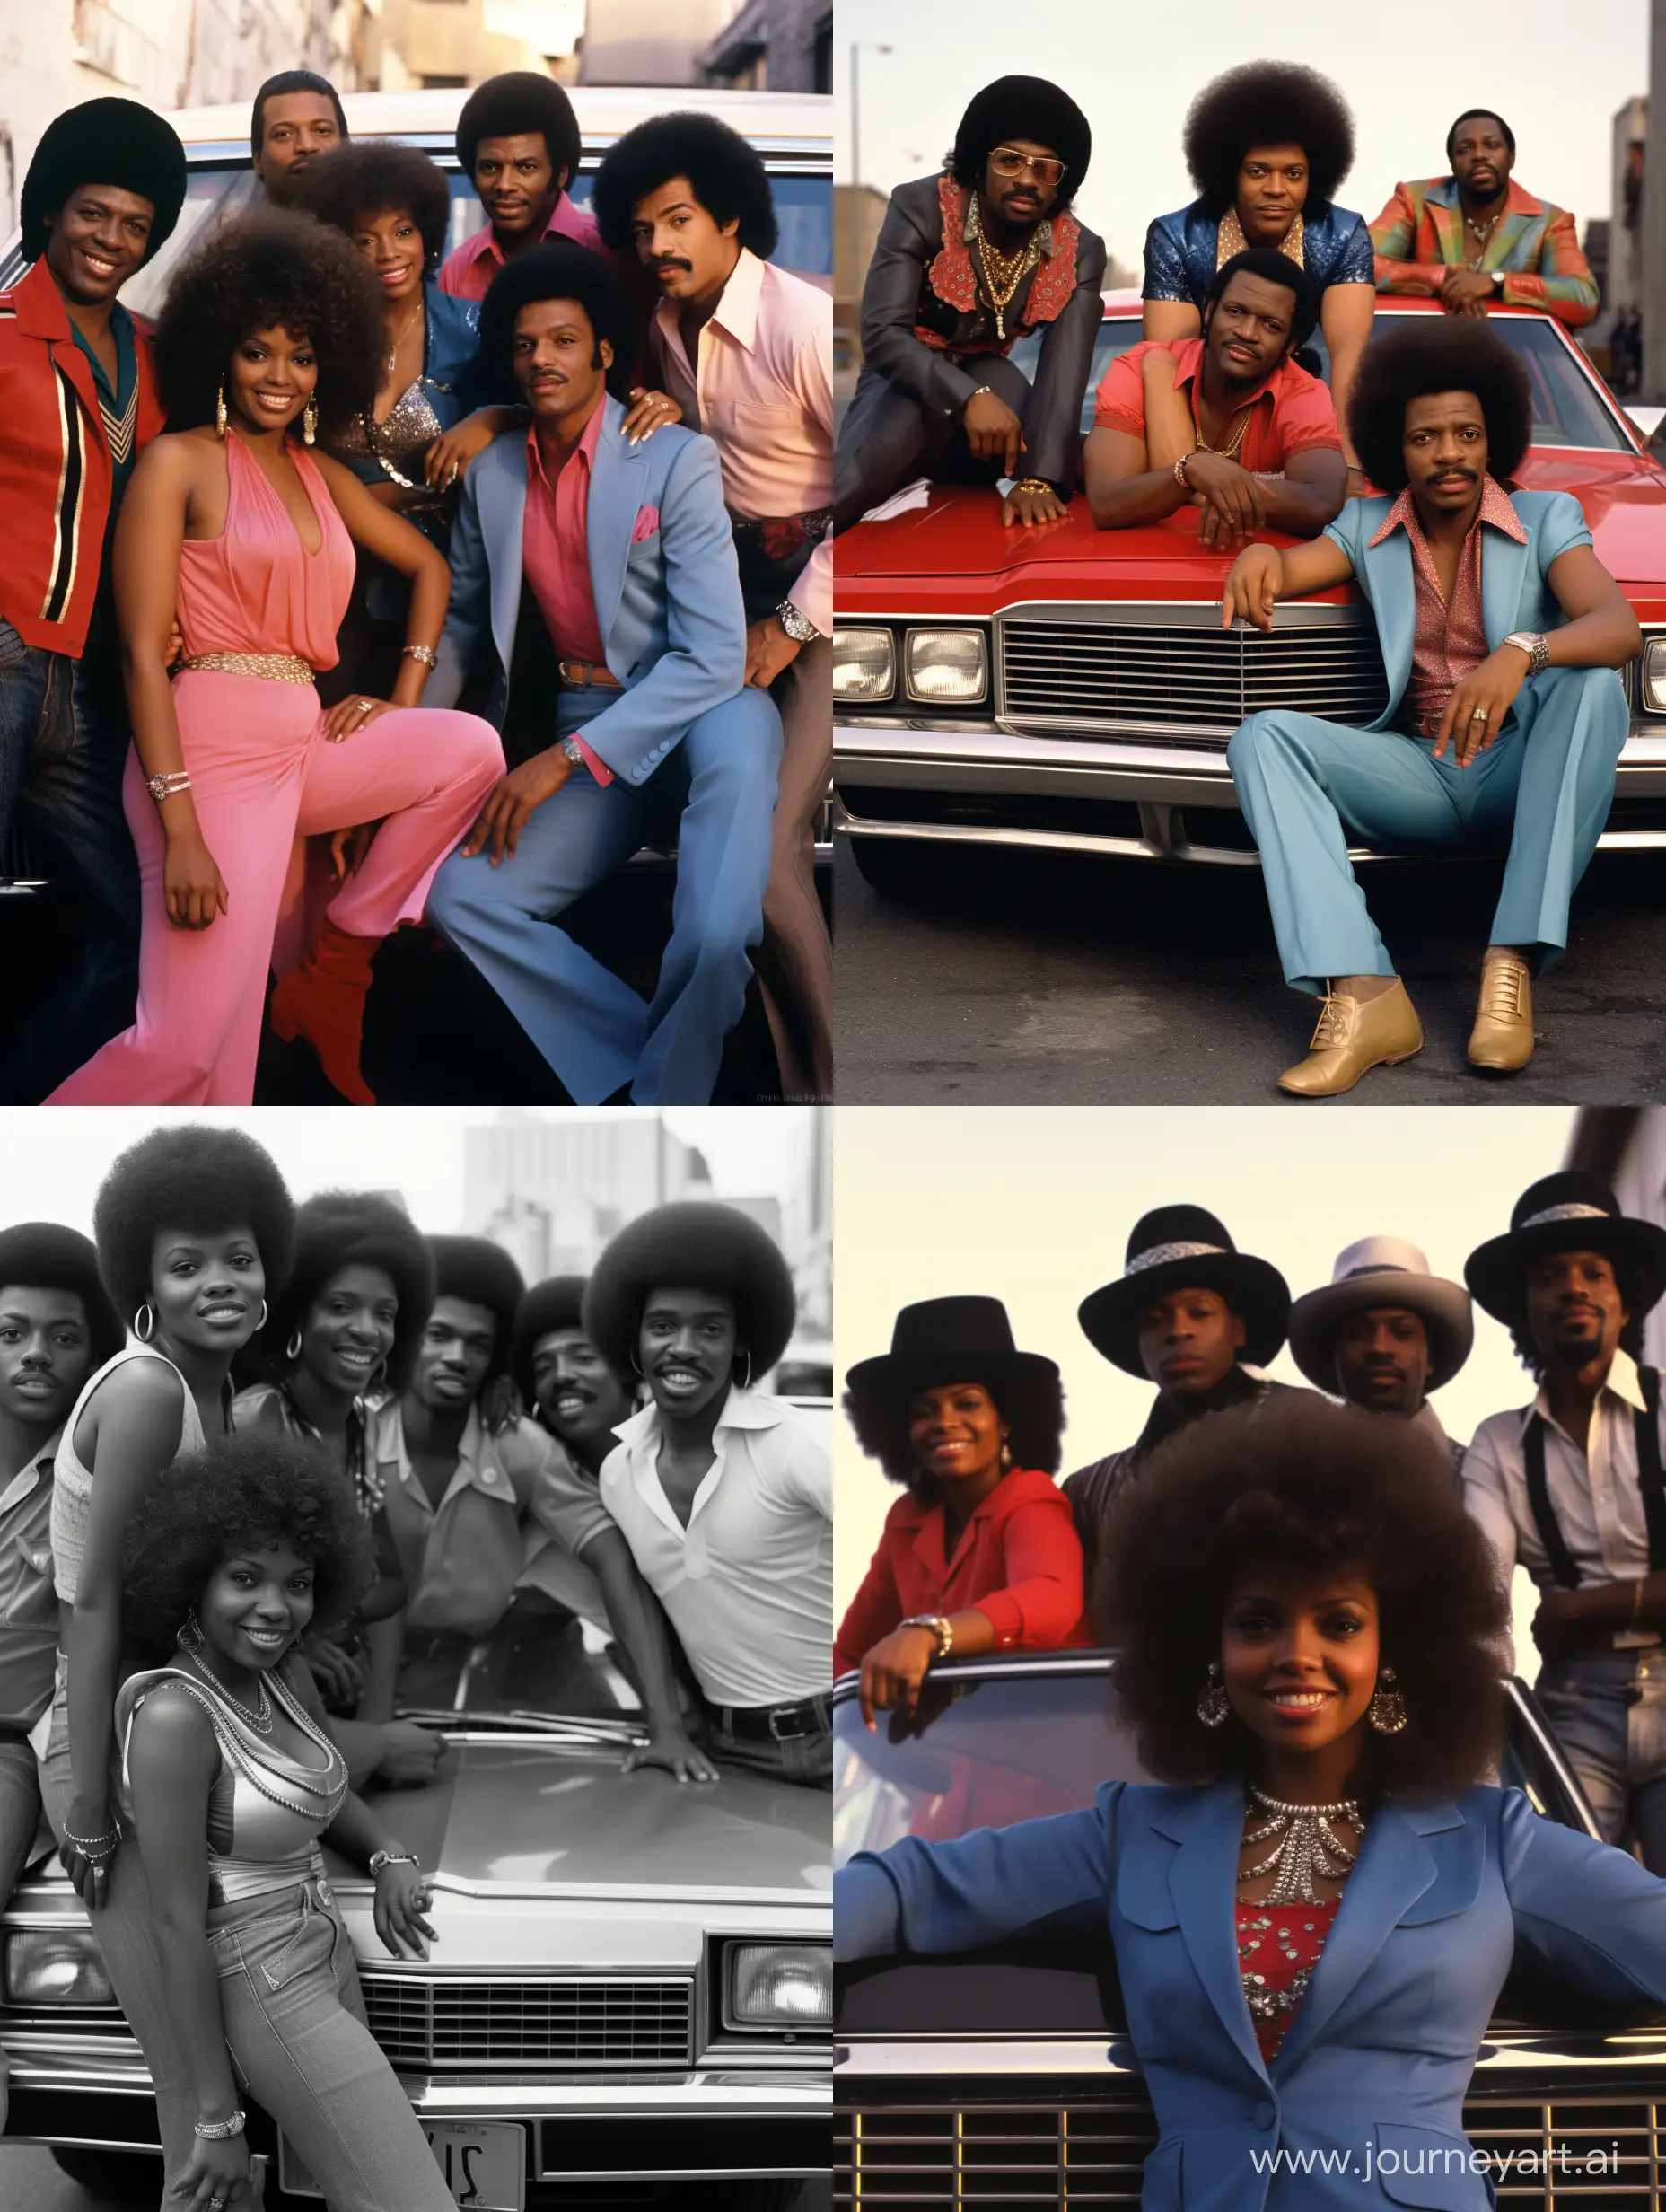 Stylish-Black-Community-Gathering-1982-Group-Photo-with-Jheri-Curls-and-Classic-Cadillacs